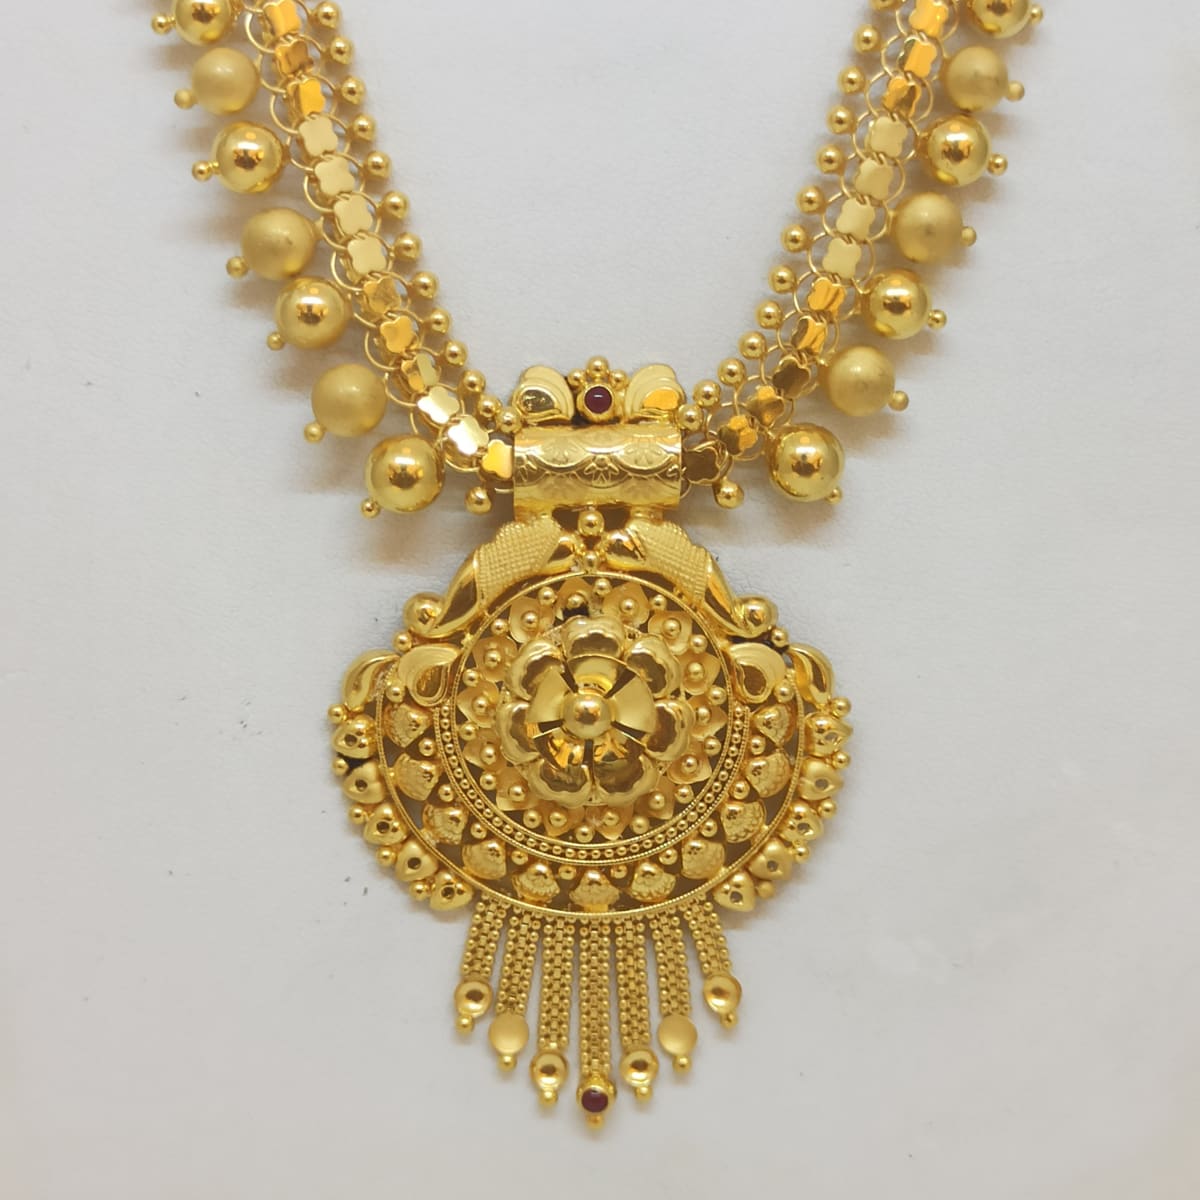 Buy Hamsagita Haram Online | Kerala Jewellers - JewelFlix